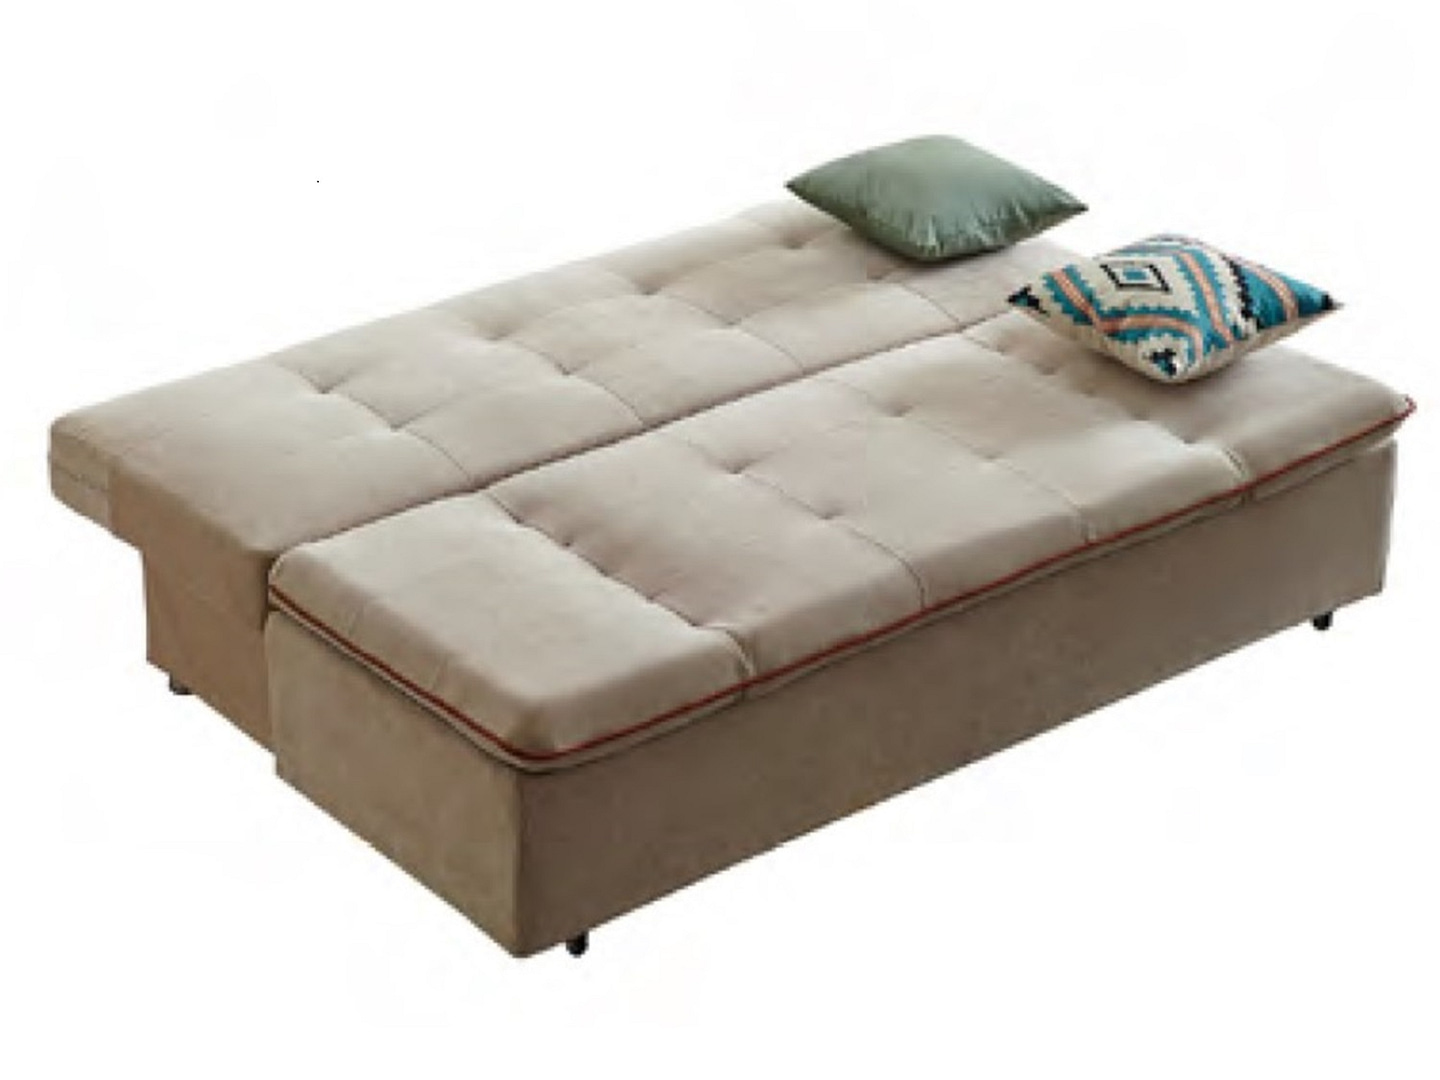 CITRA Sofa Bed - Queen Bed